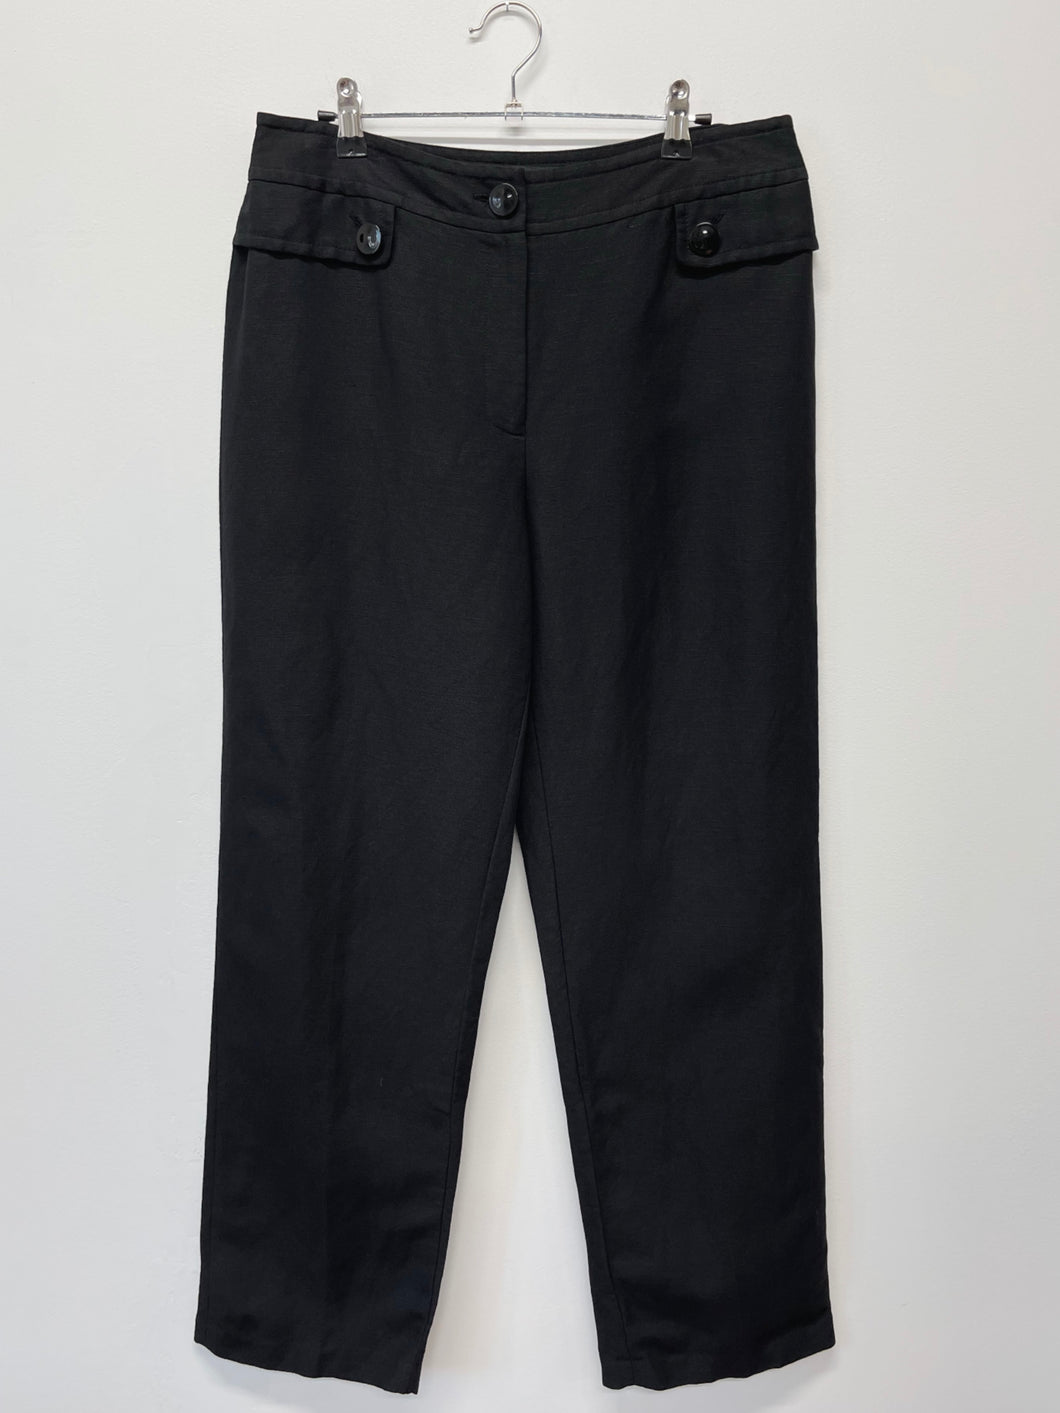 Black Linen Pants (W32